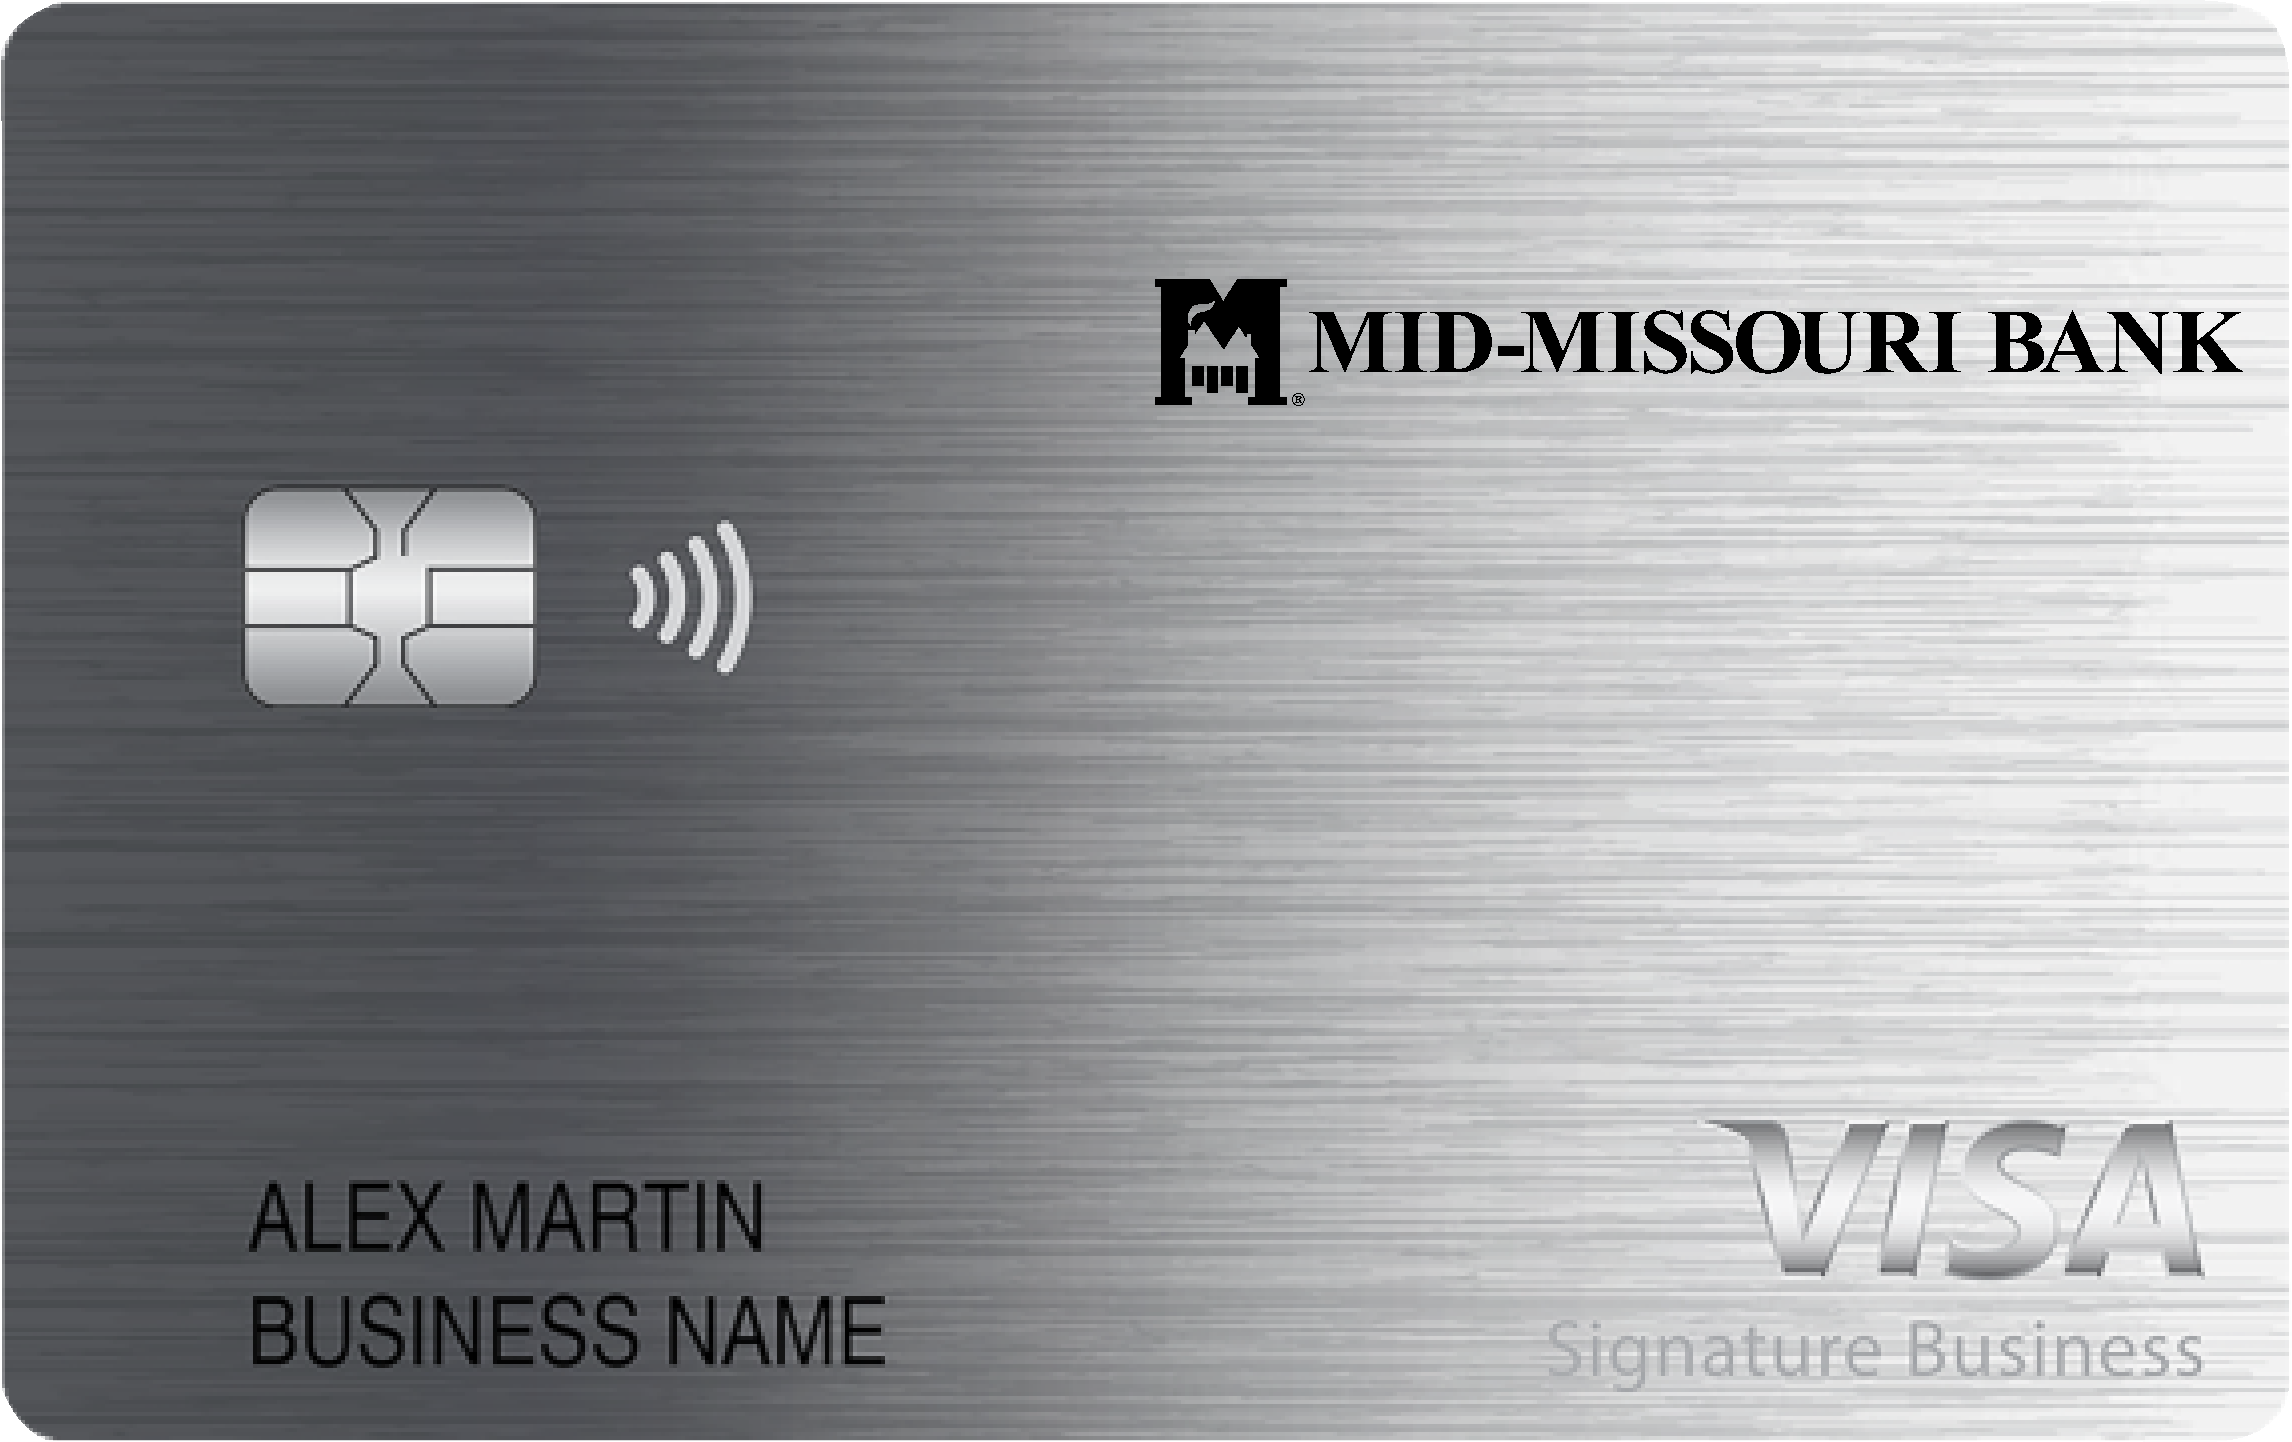 Mid-Missouri Bank Smart Business Rewards Card